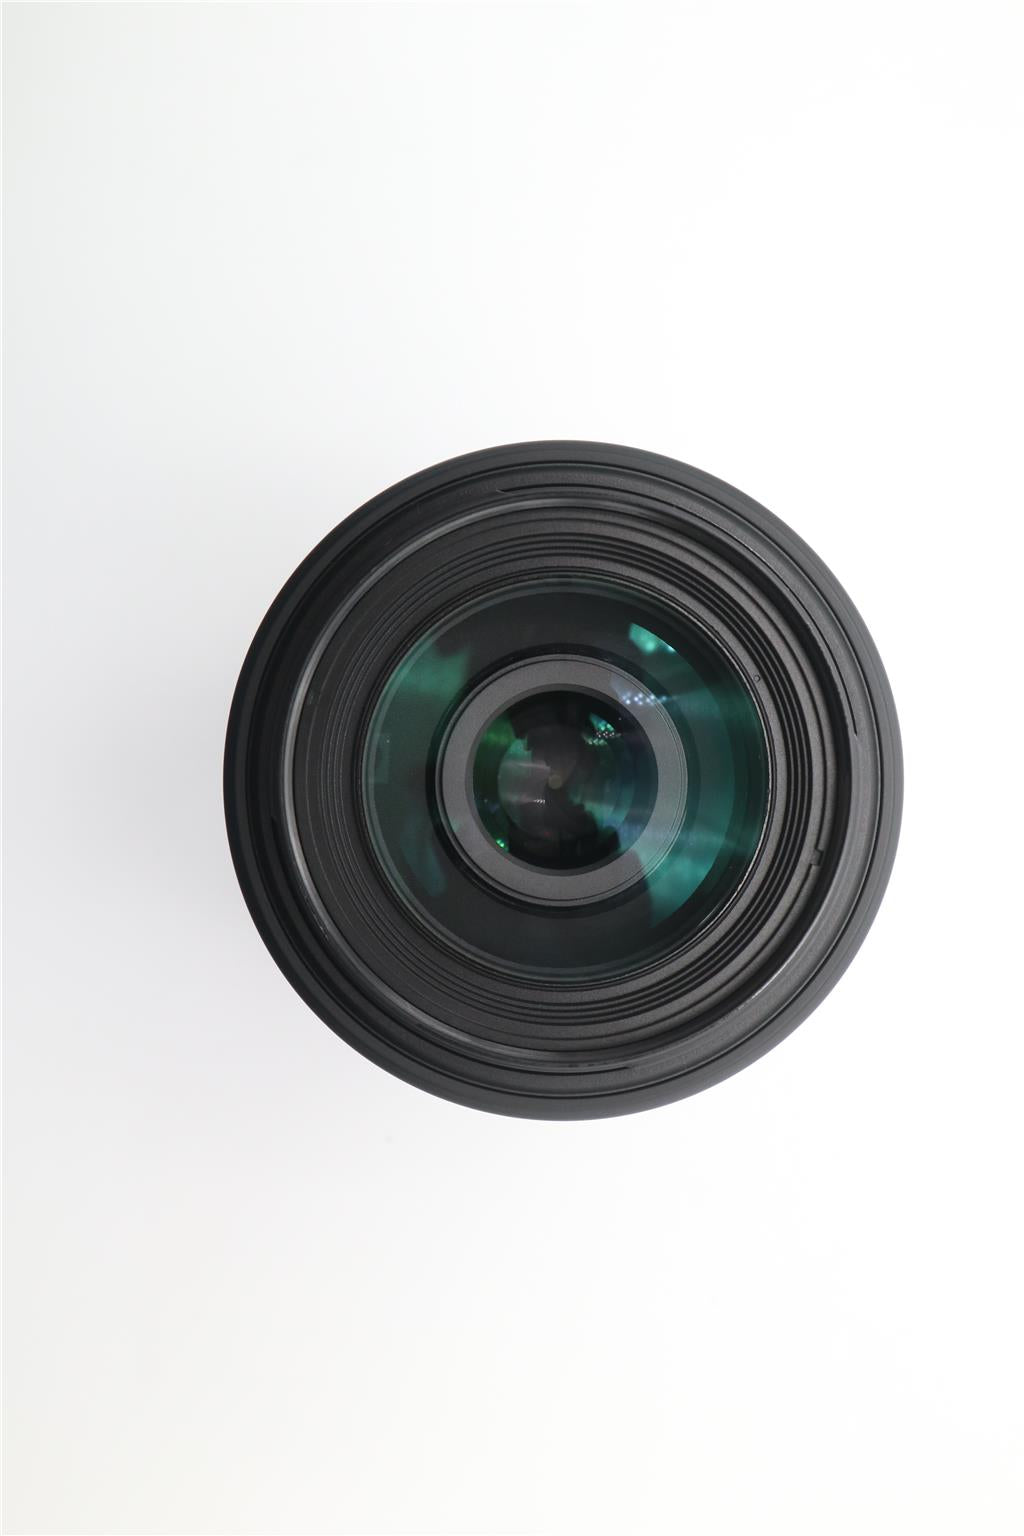 Sony 55-200mm F4-5.6 Lens, SAL55200-2, Telephoto Sony for A-Mount, V. G. REFURB.